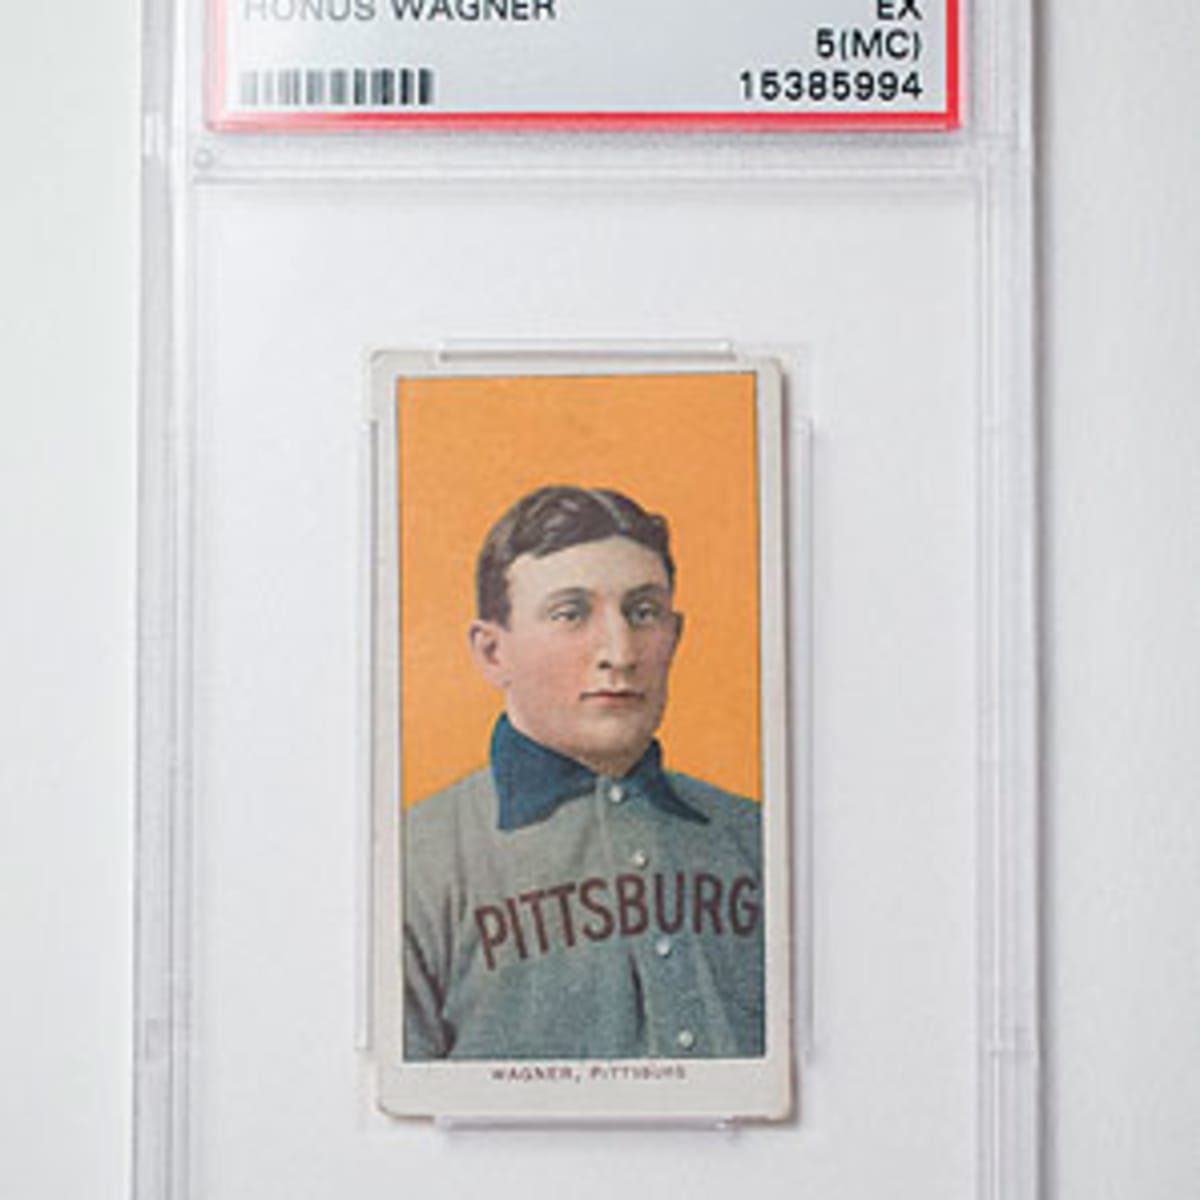 Honus Wagner card sells for $2.1 million - Sports Illustrated